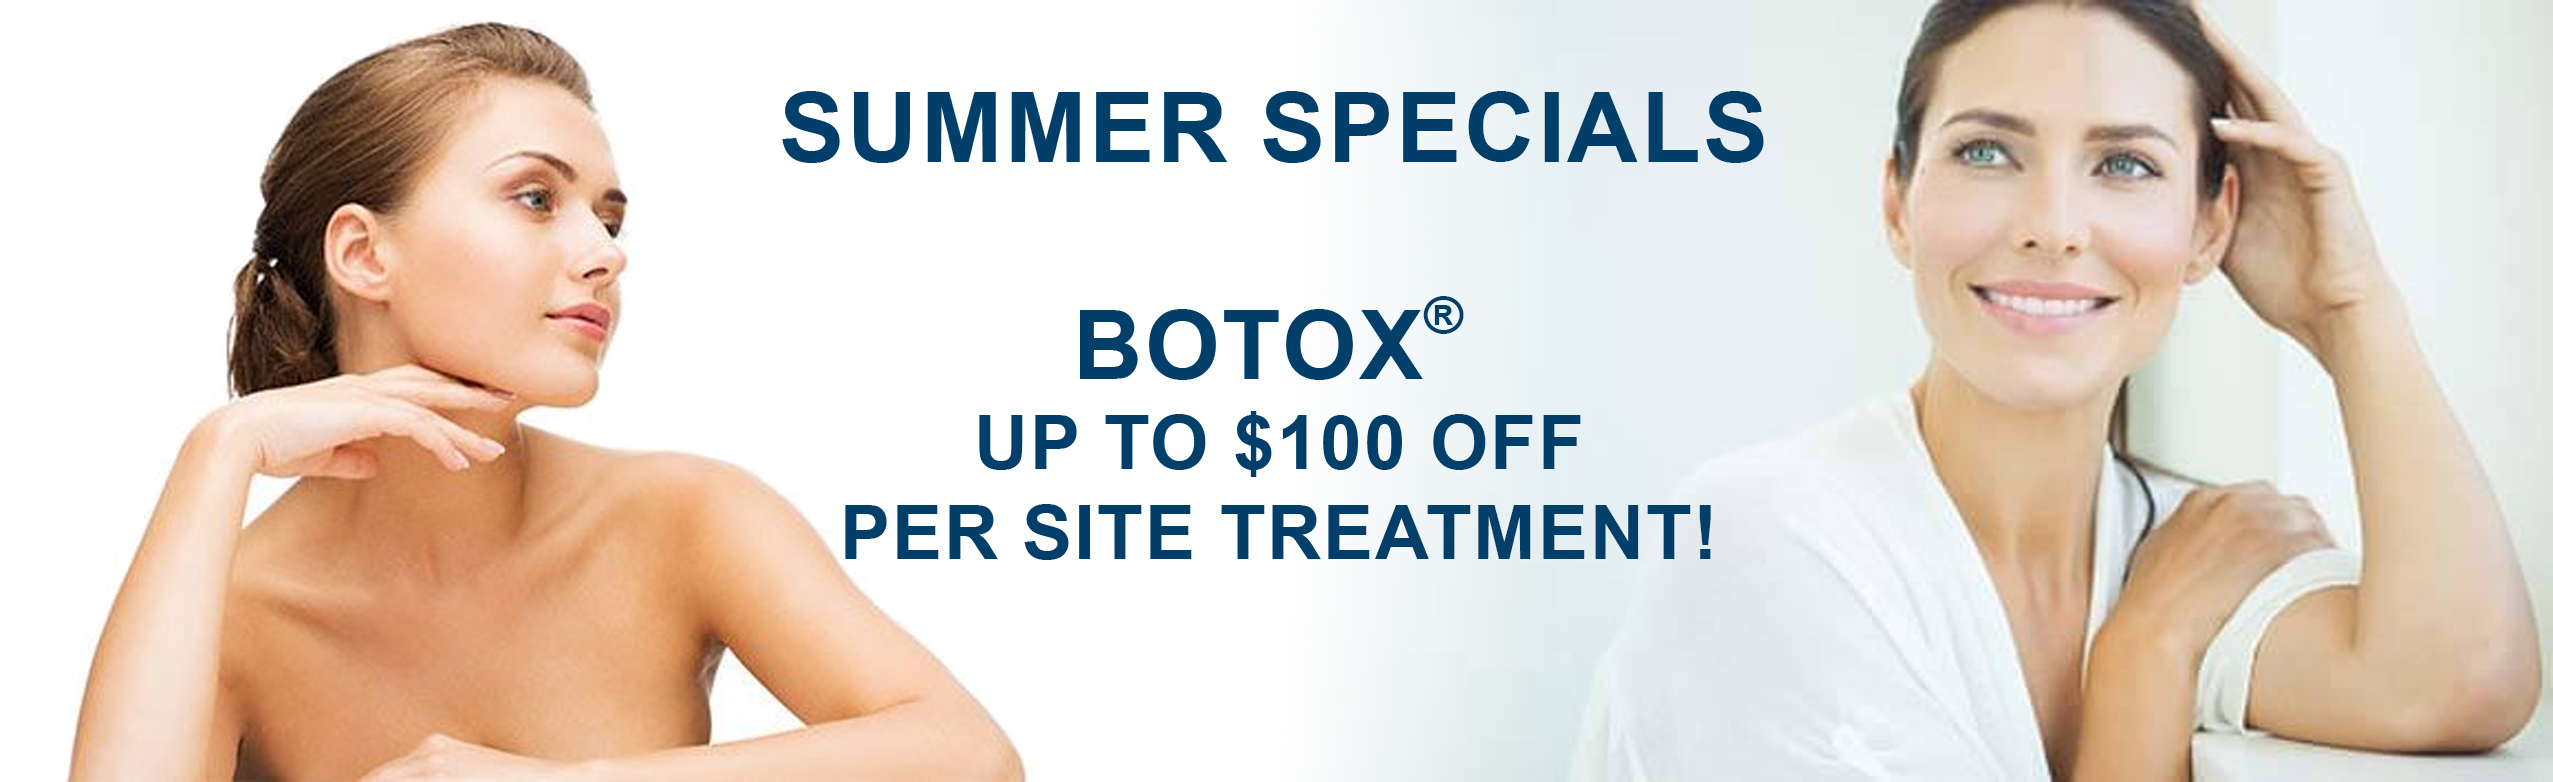 Summer Specials - Botox